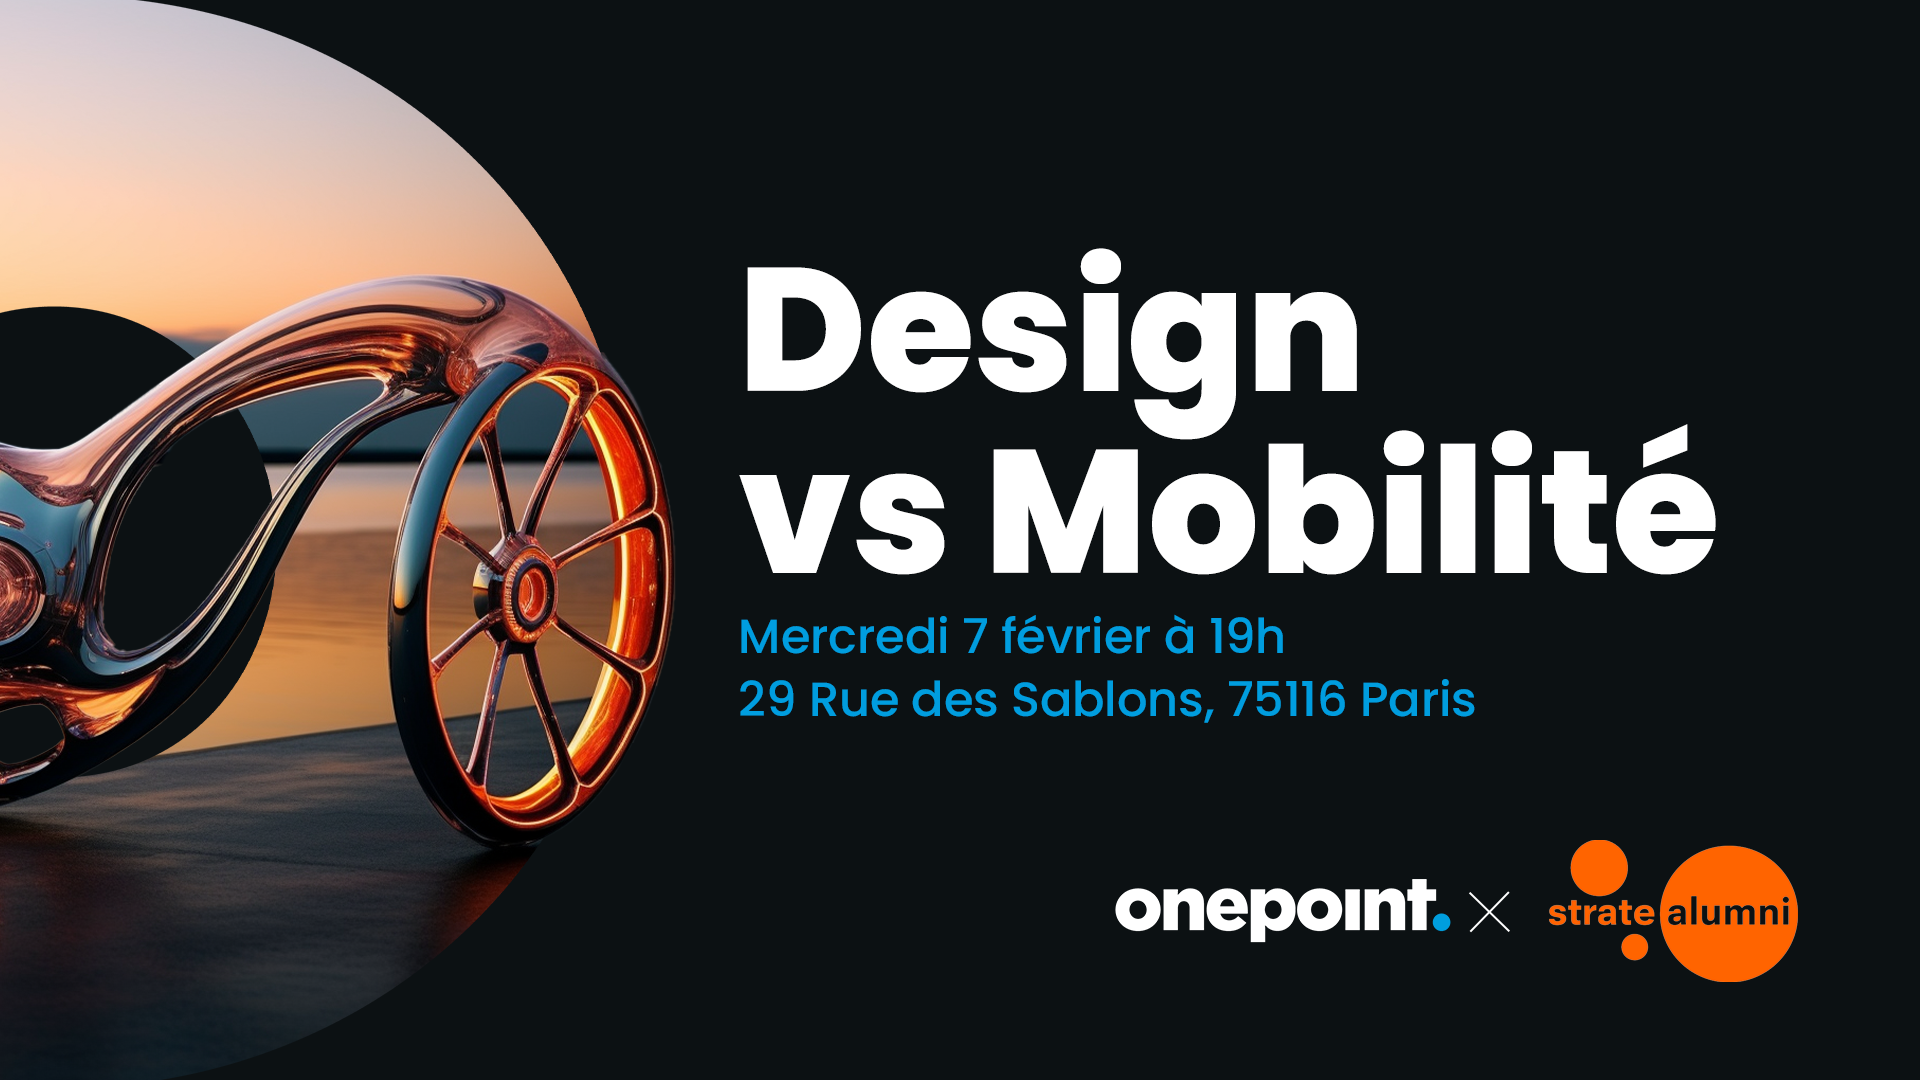 Design vs mobilté Onepoint